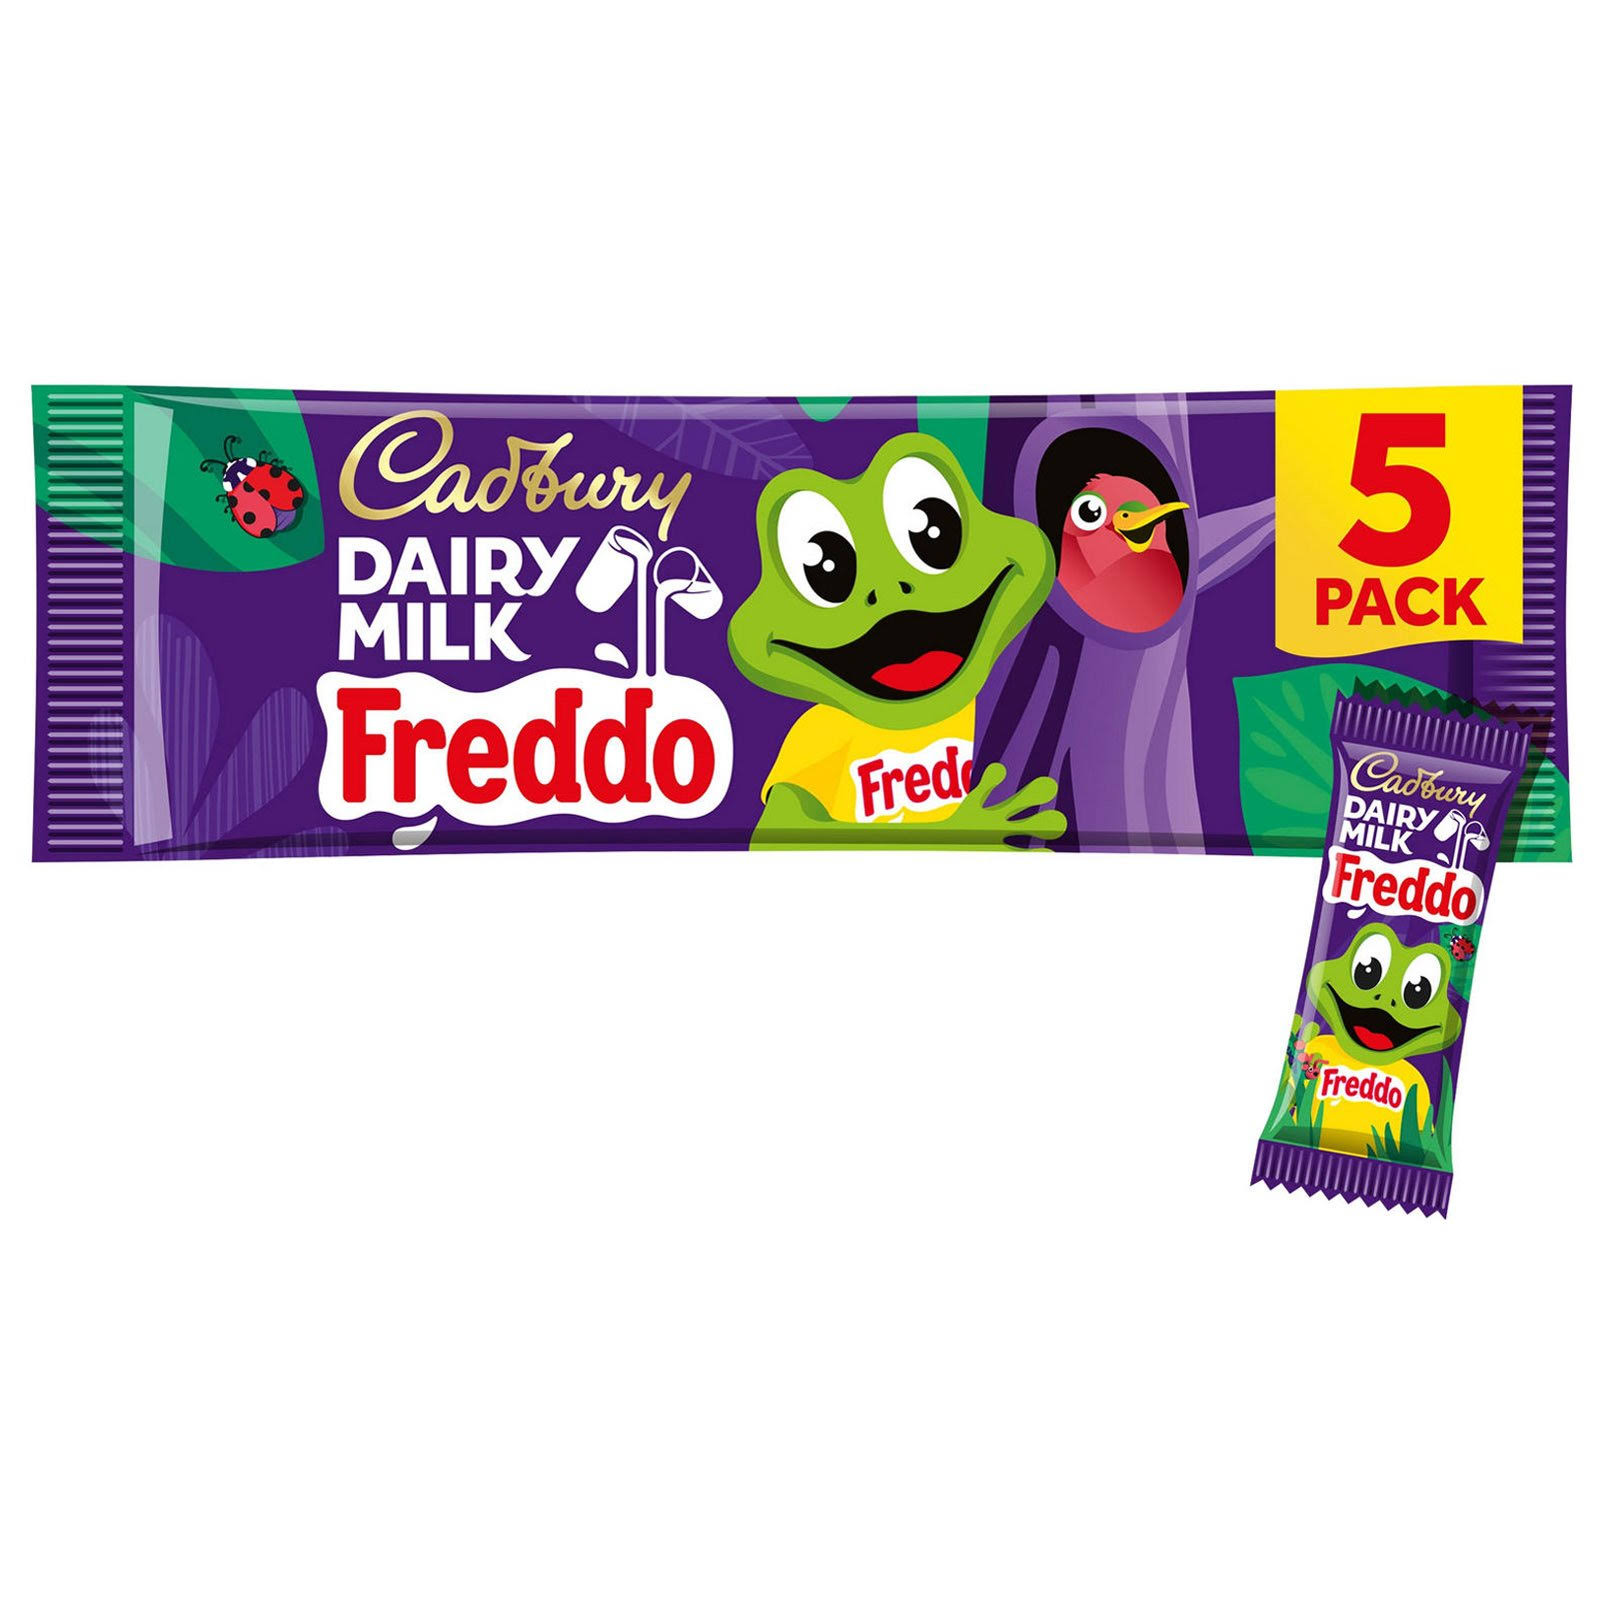 Cadbury Dairy Milk Freddo Chocolate Bar - 5 Pack, 90g